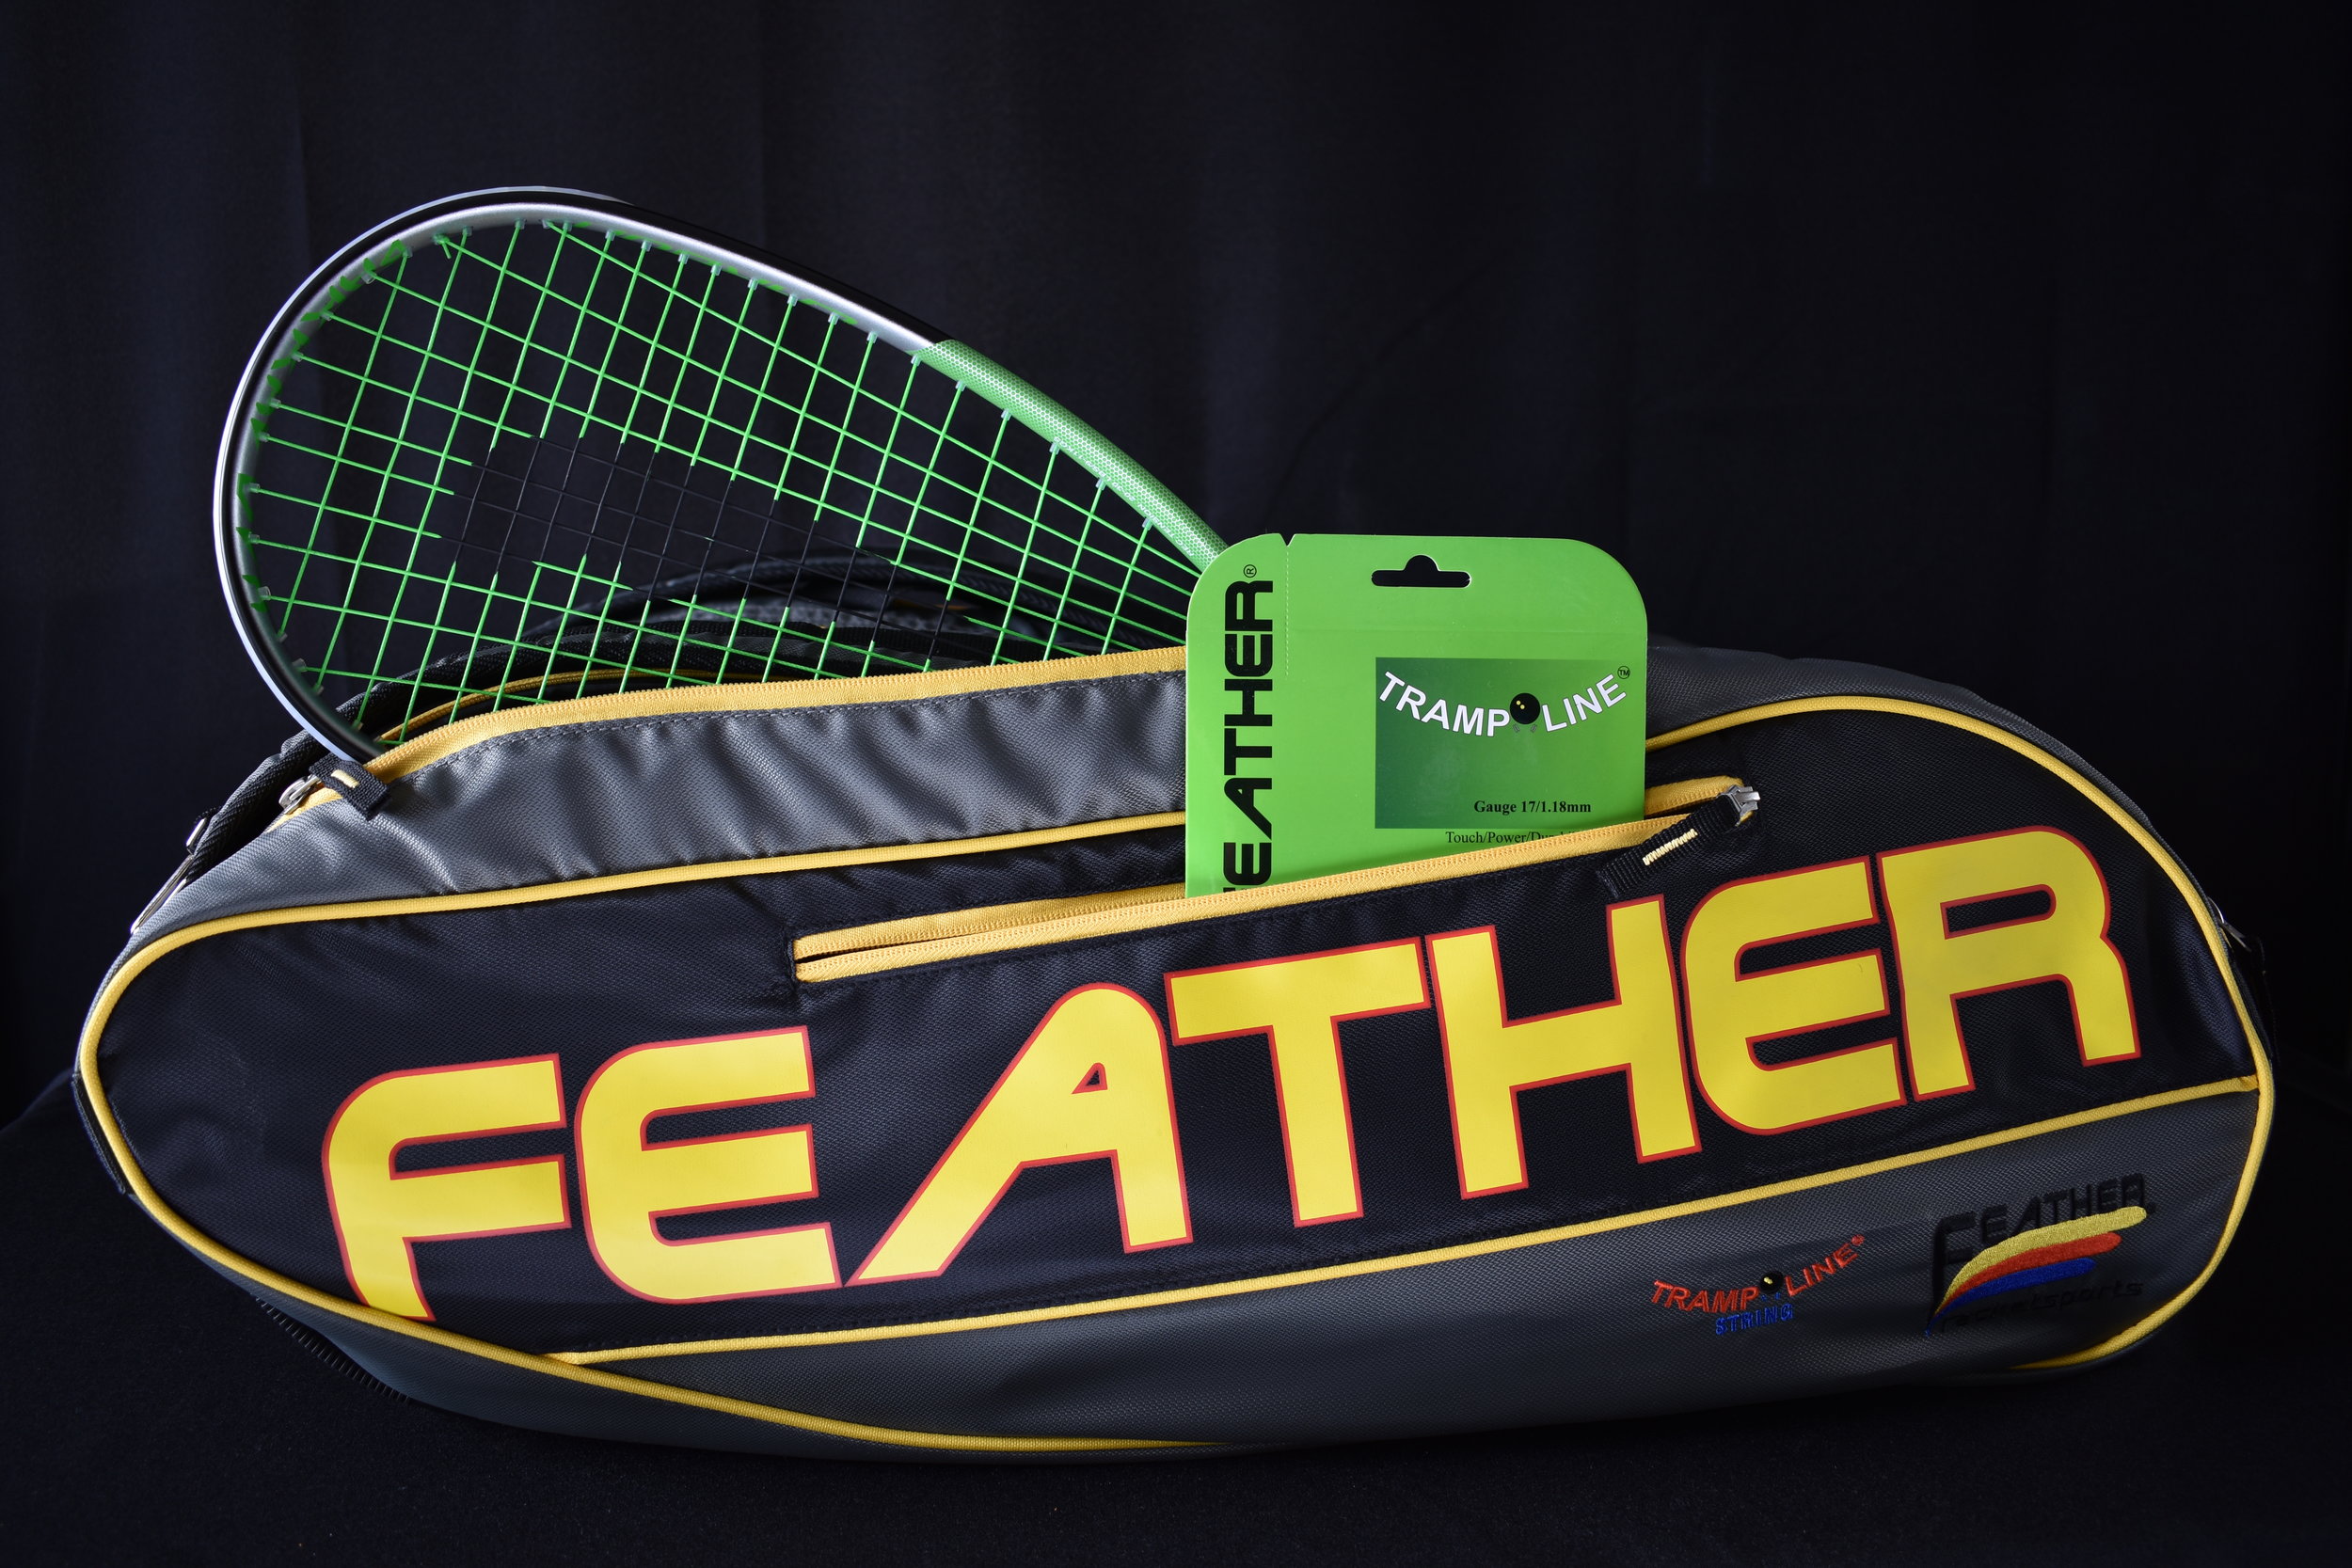 Barracuda Pro Racket Bag, Feather Racket Shop